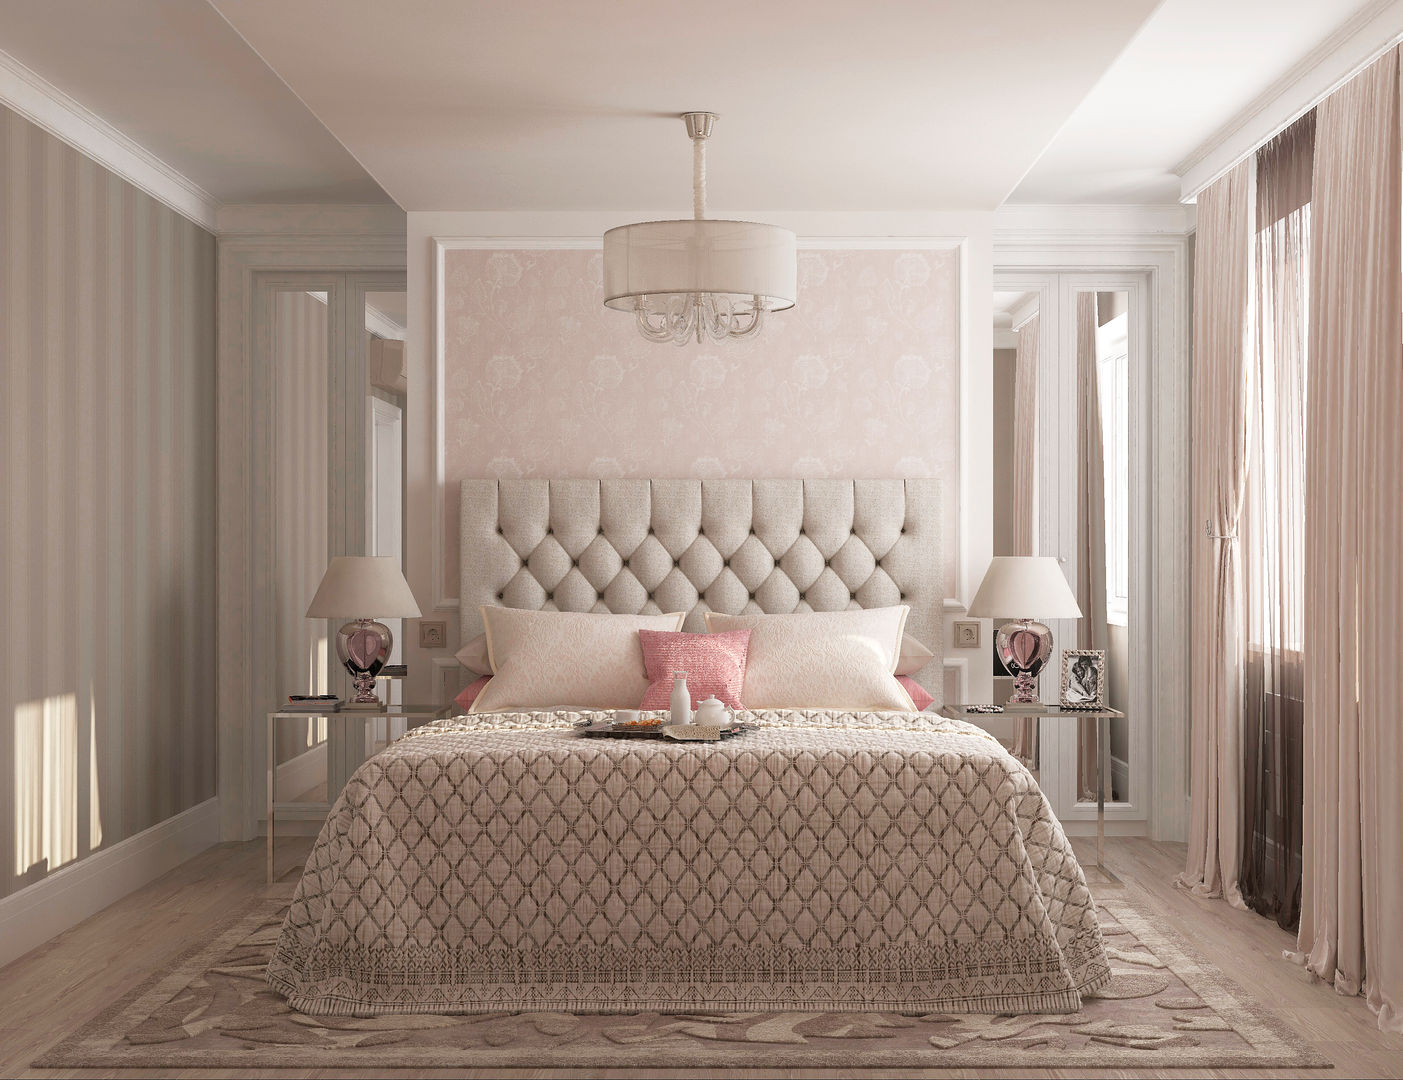 Спальня гостевая "Glamour", Студия дизайна Дарьи Одарюк Студия дизайна Дарьи Одарюк 臥室